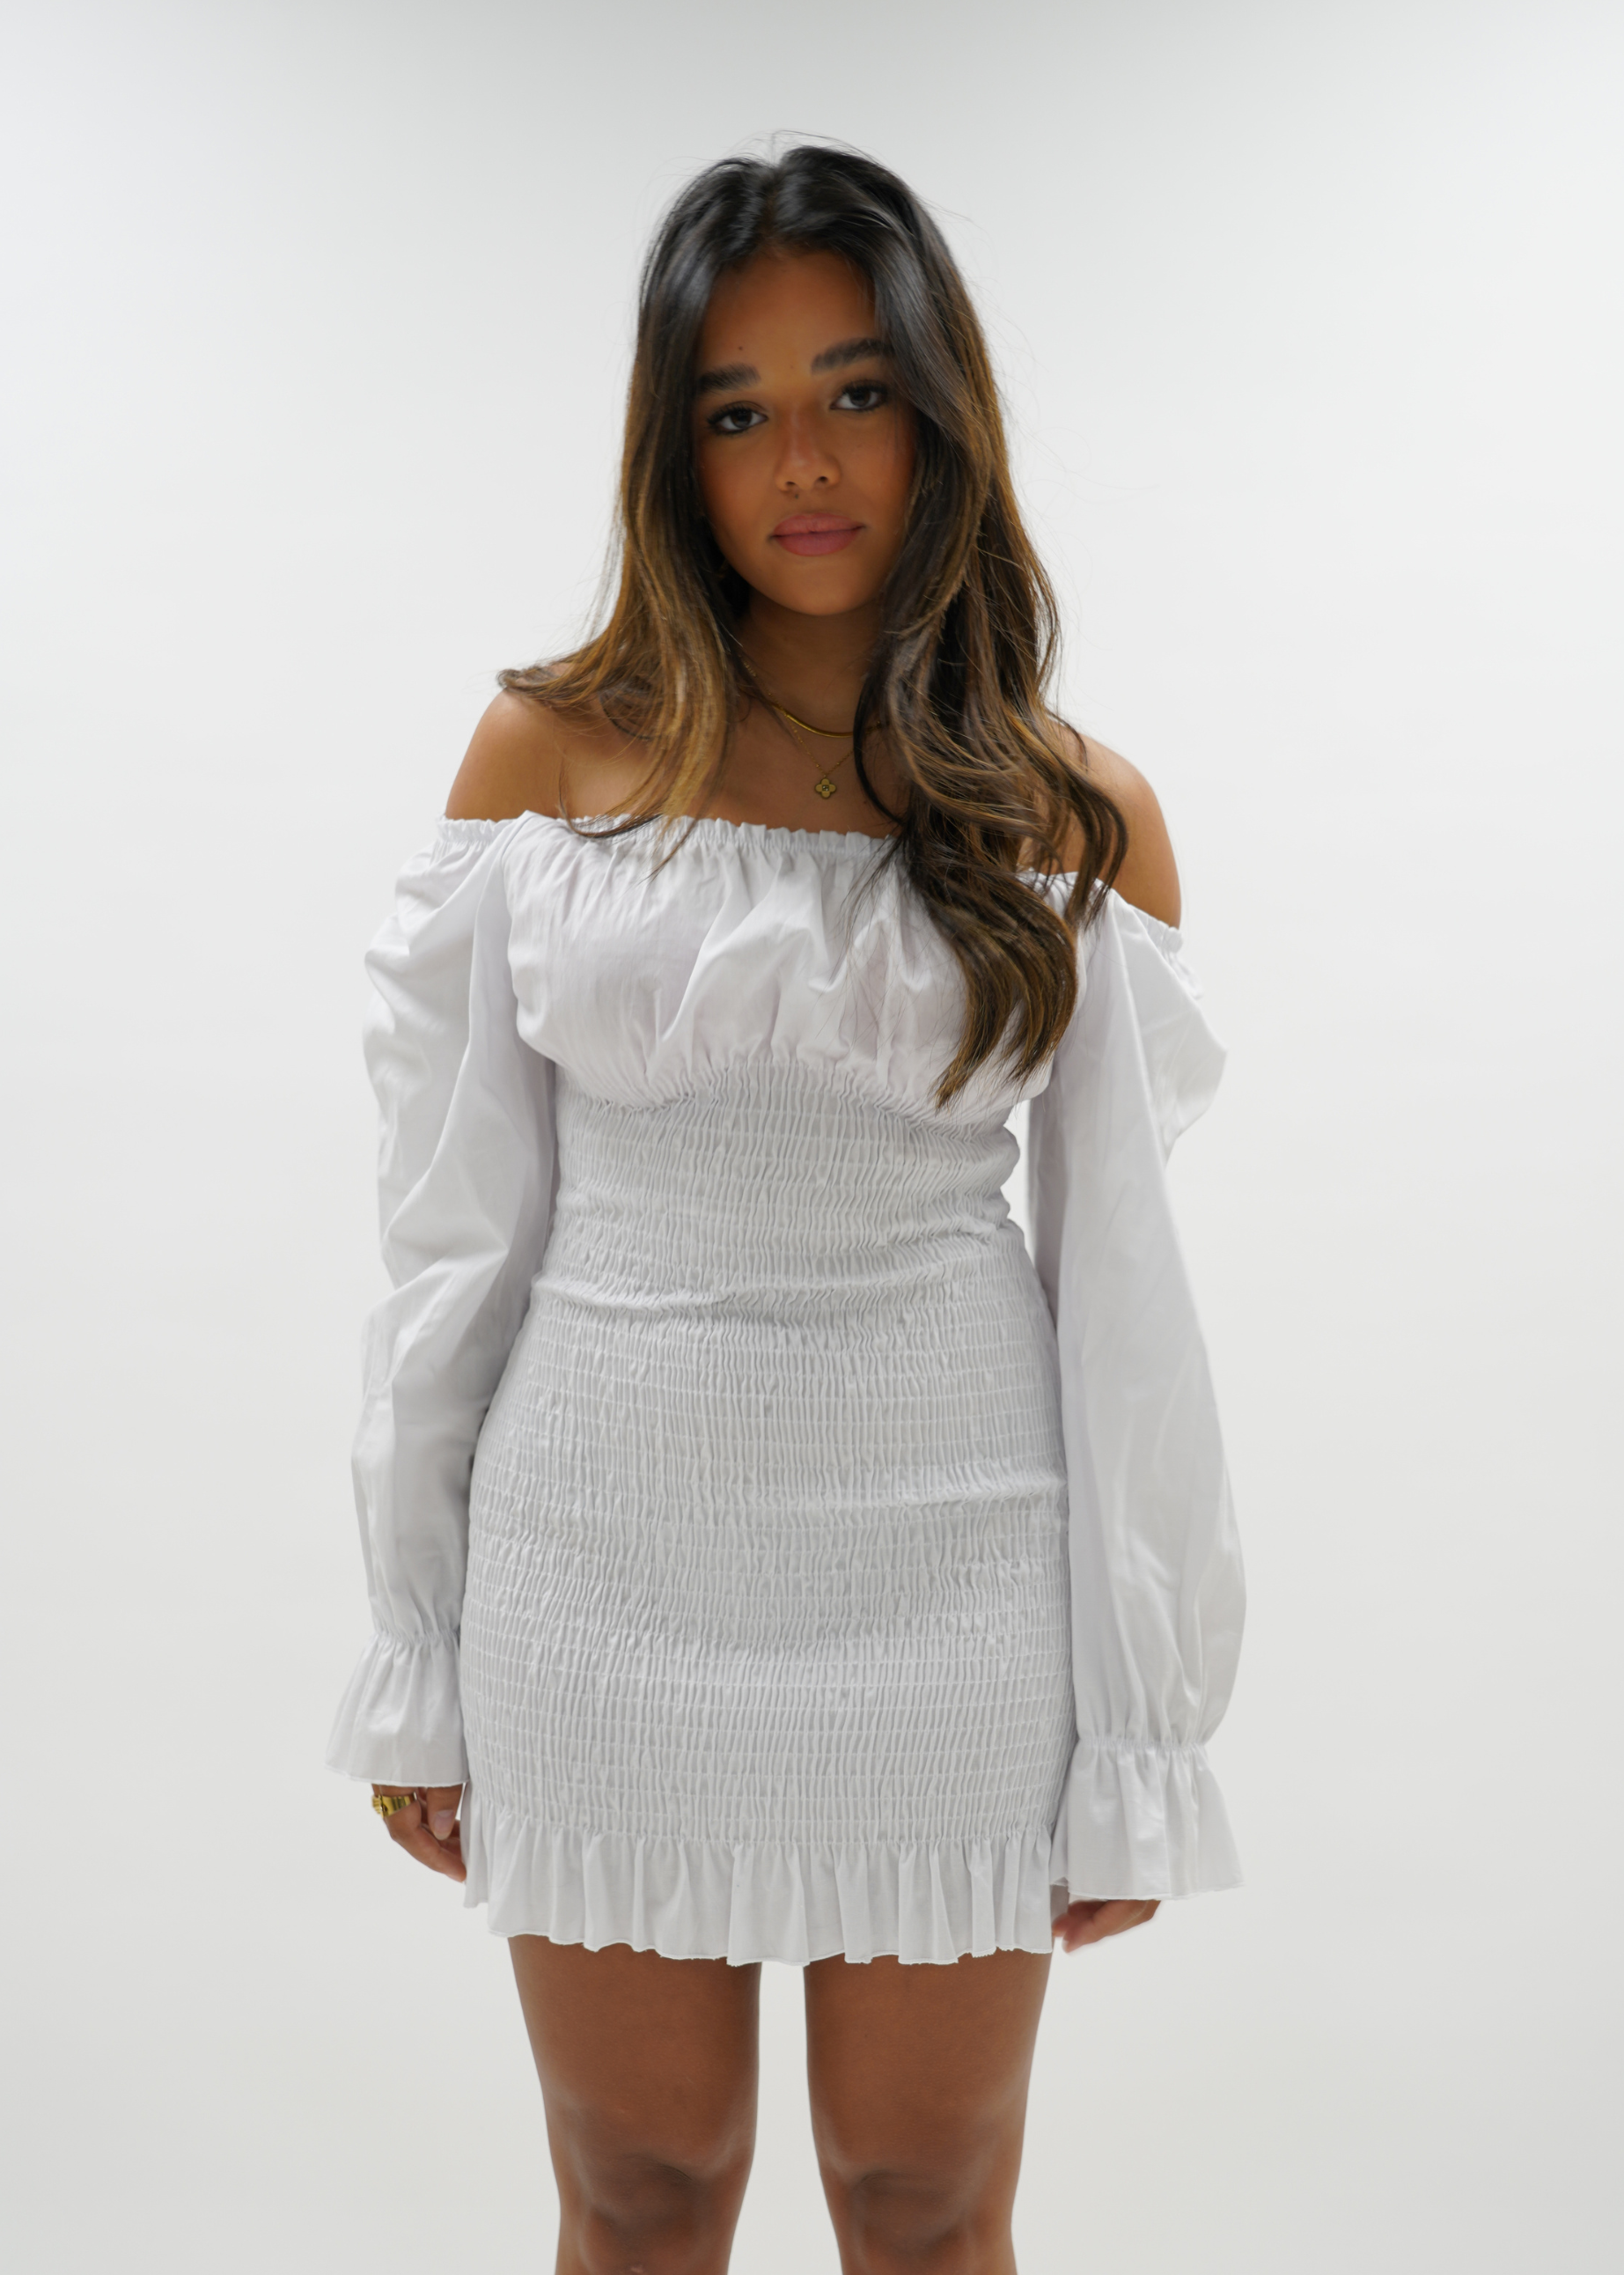 Mauré dress white